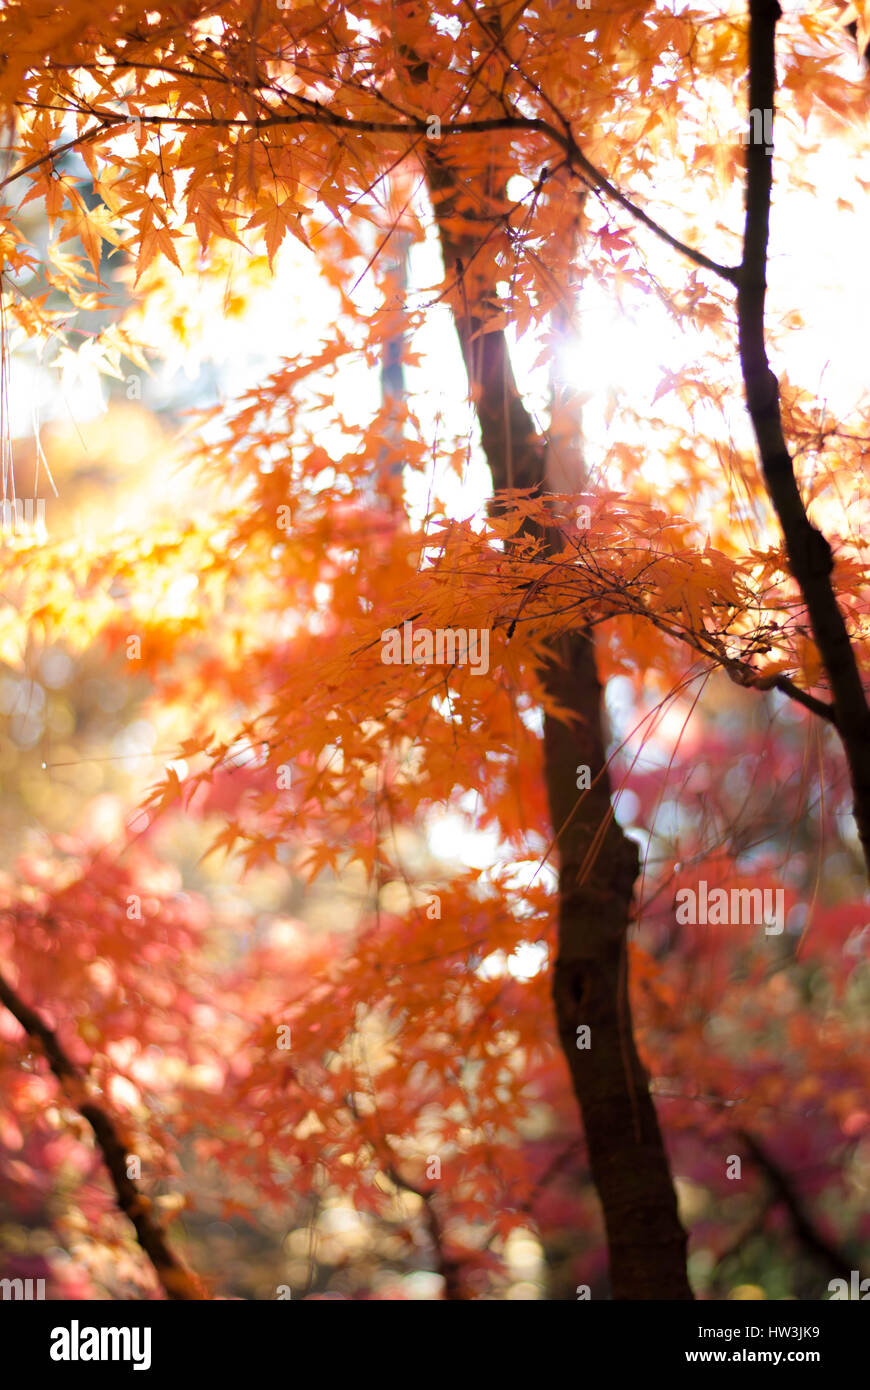 Autumn sun shining through orange and yellow maple leaves Stock Photo